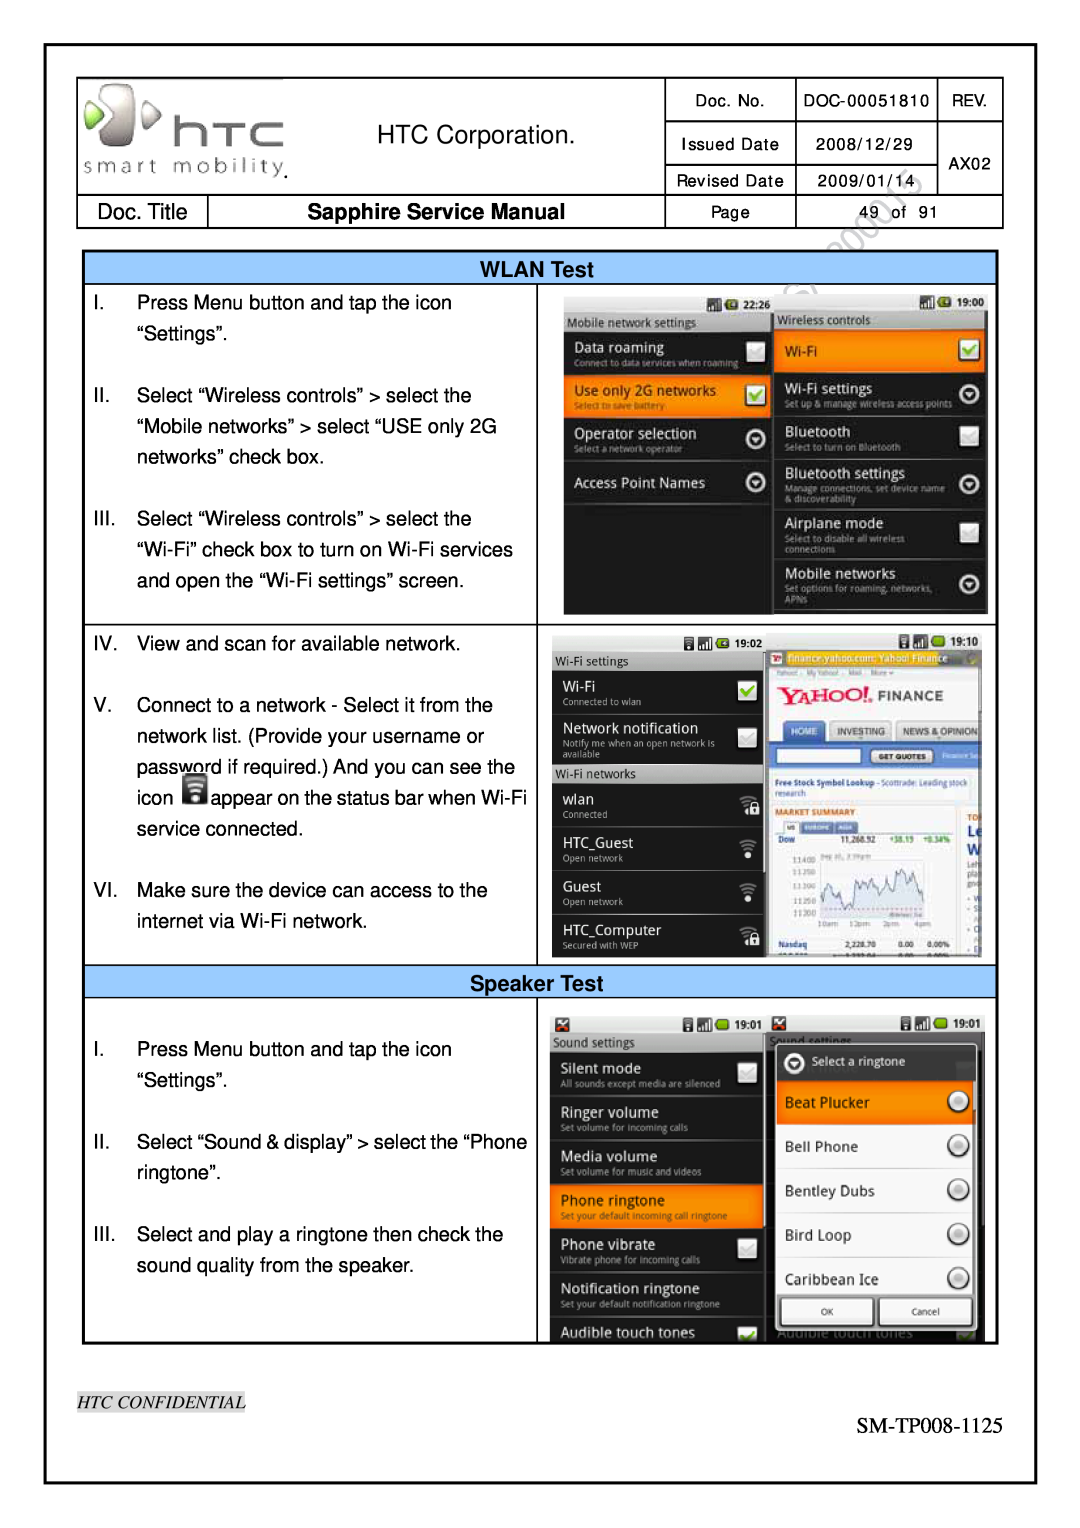 HTC SM-TP008-1125 service manual WLAN Test, Speaker Test, HTC Corporation, Sapphire Service Manual 